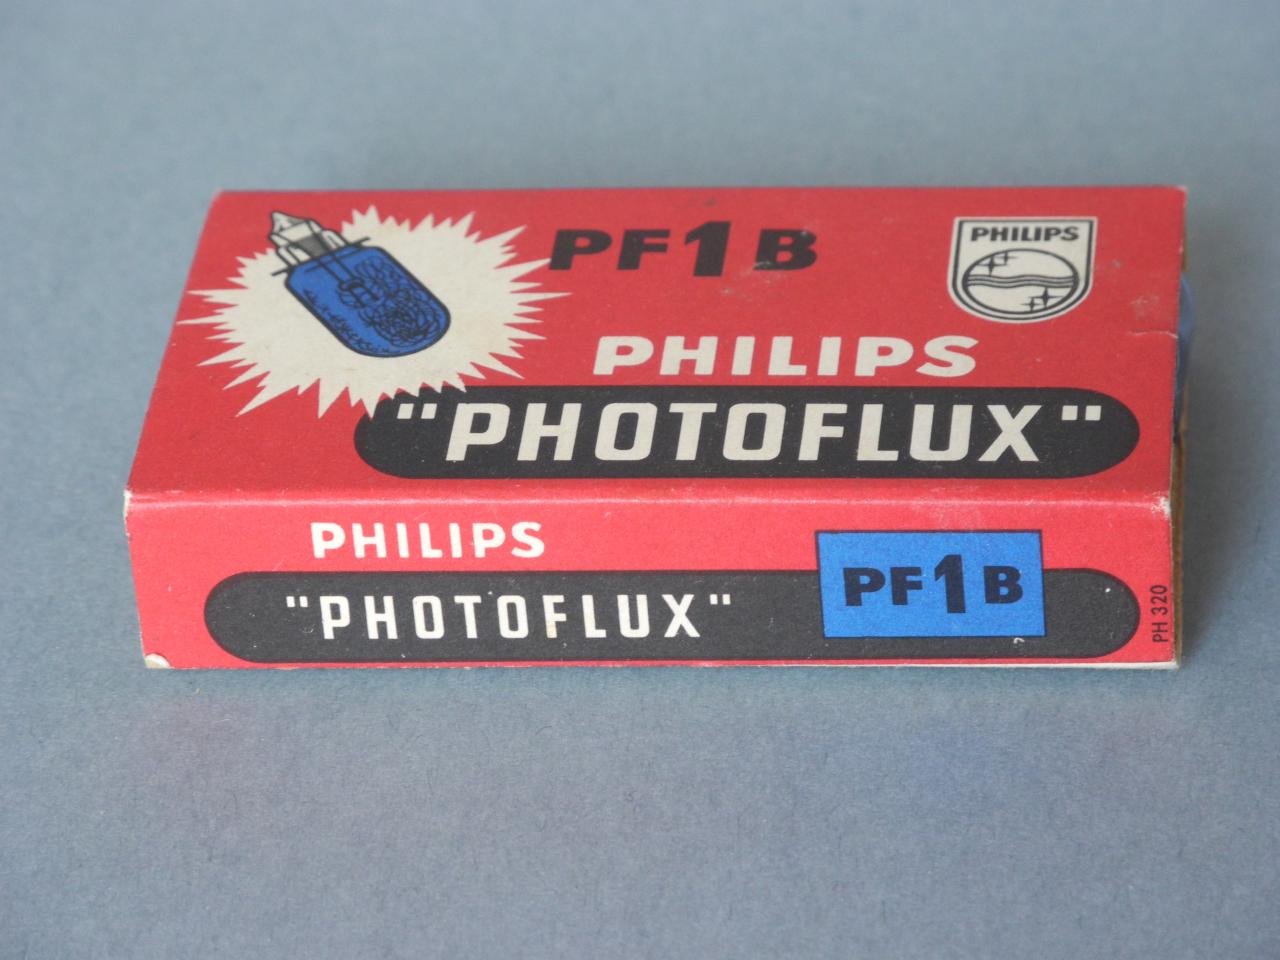 *Photoflux PF 1 B Philips*